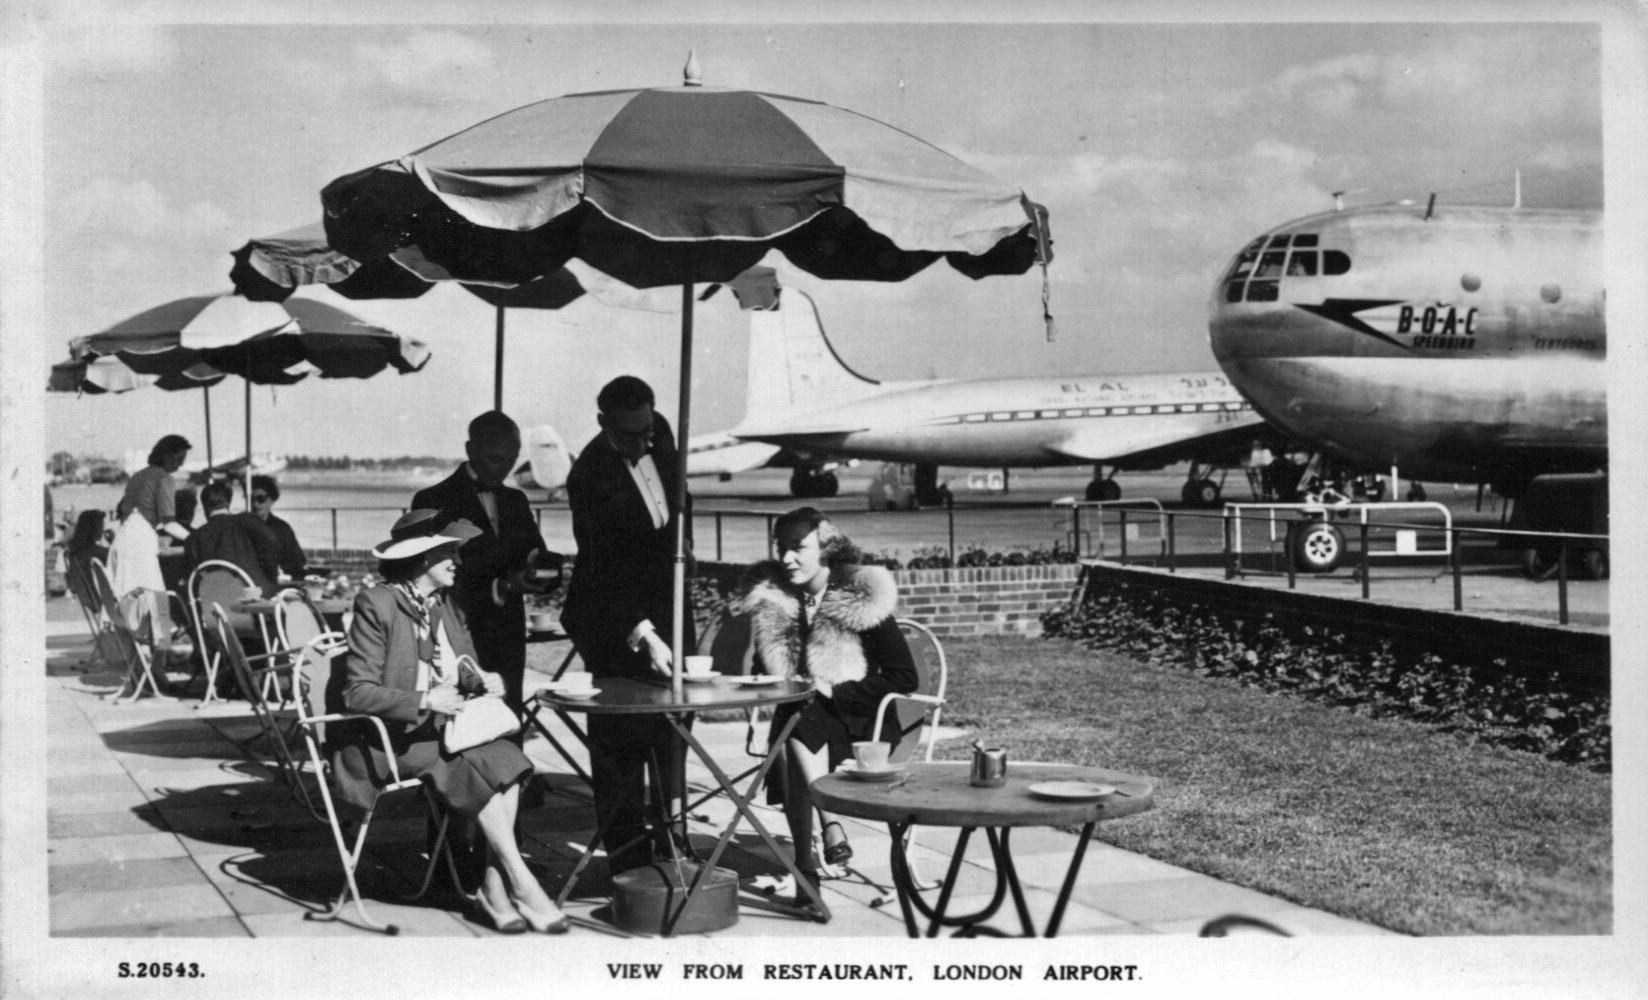 Travel Pan Am El Presidente B377 ad